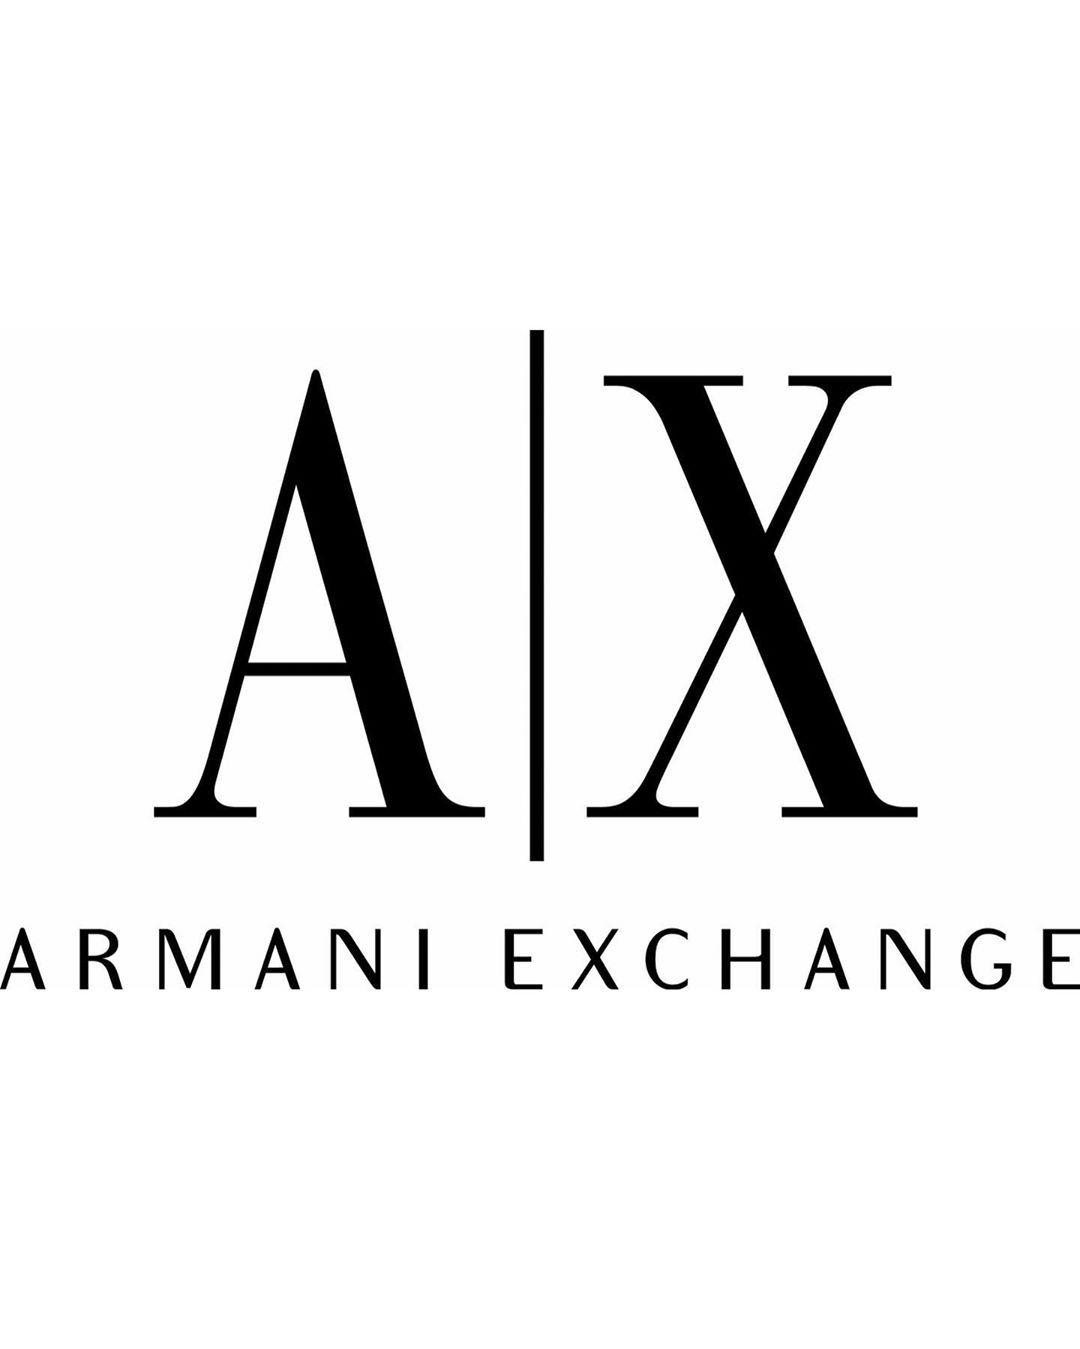 Armani Exchange Wallpapers - Wallpaper Cave